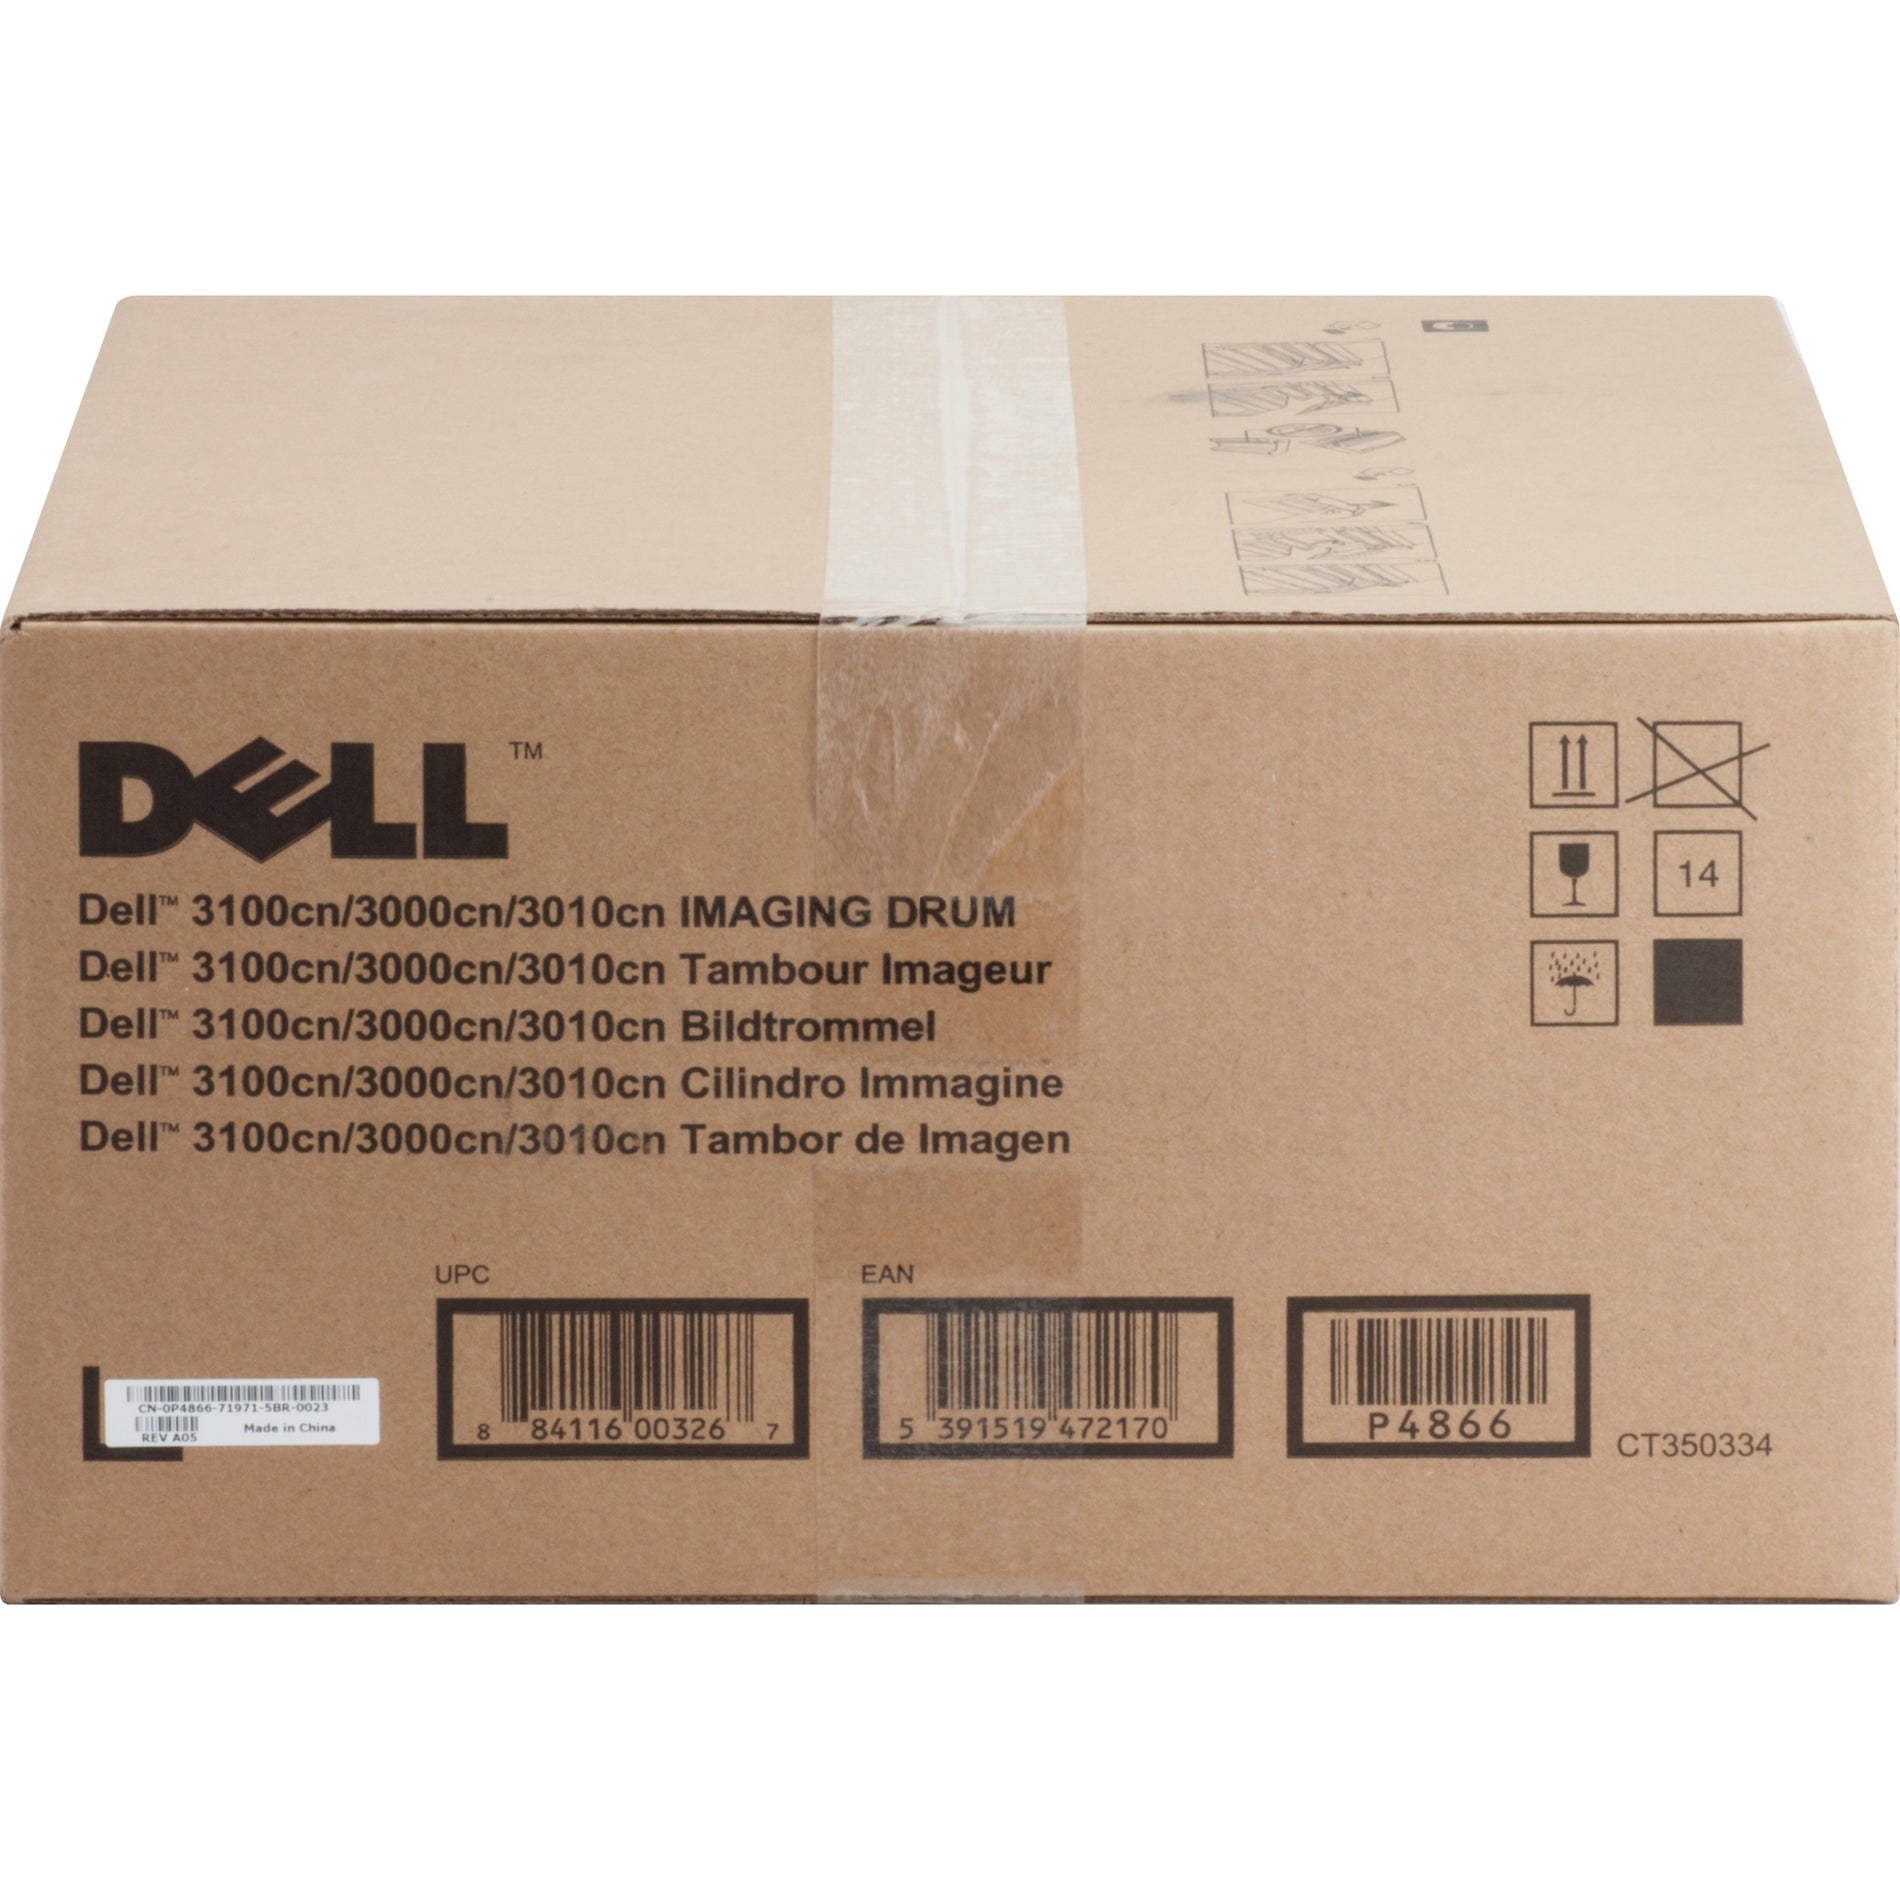 Dell P4866 Imaging Drum Cartridge - Laser Print Technology, Black